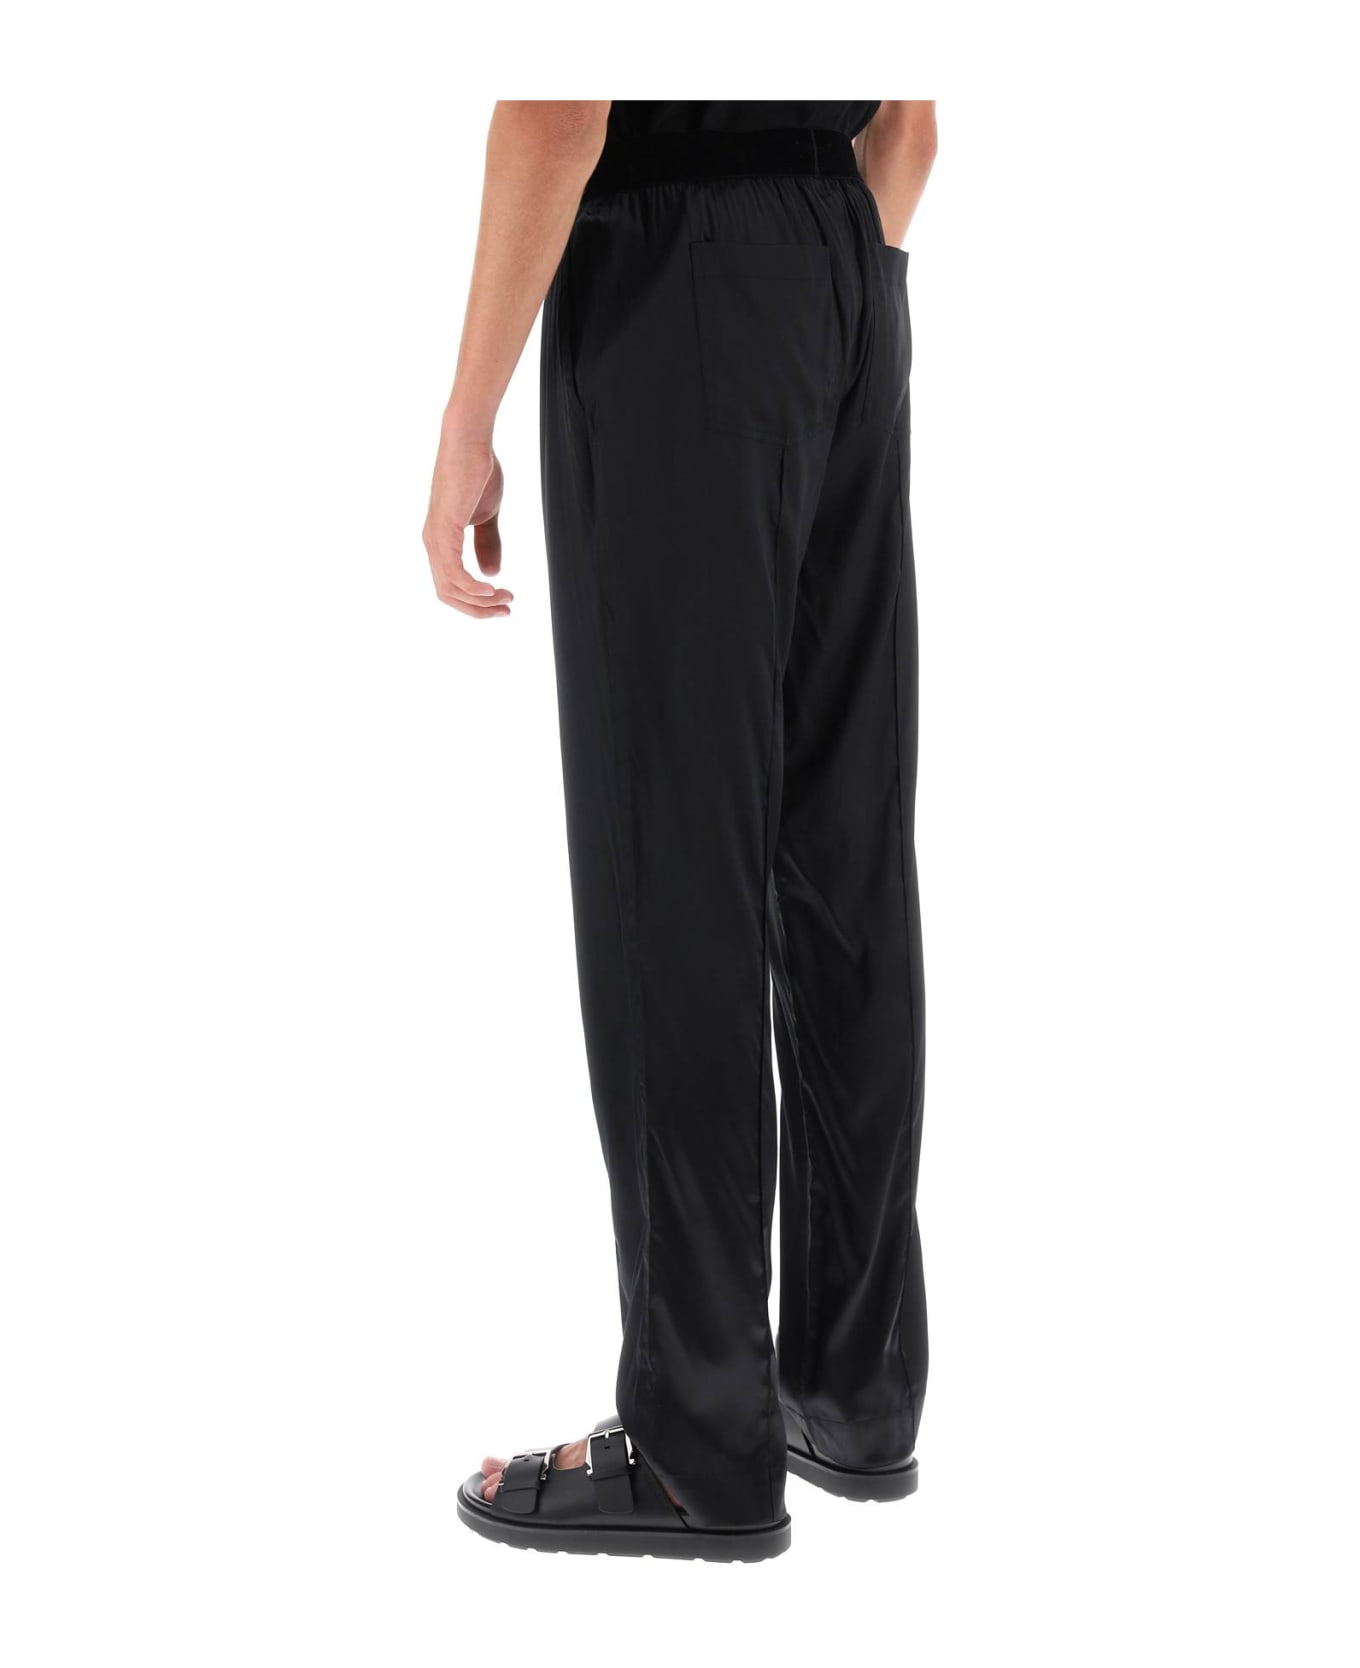 Tom Ford Logo Waist Satin Pajama Trousers - NERO (Black)